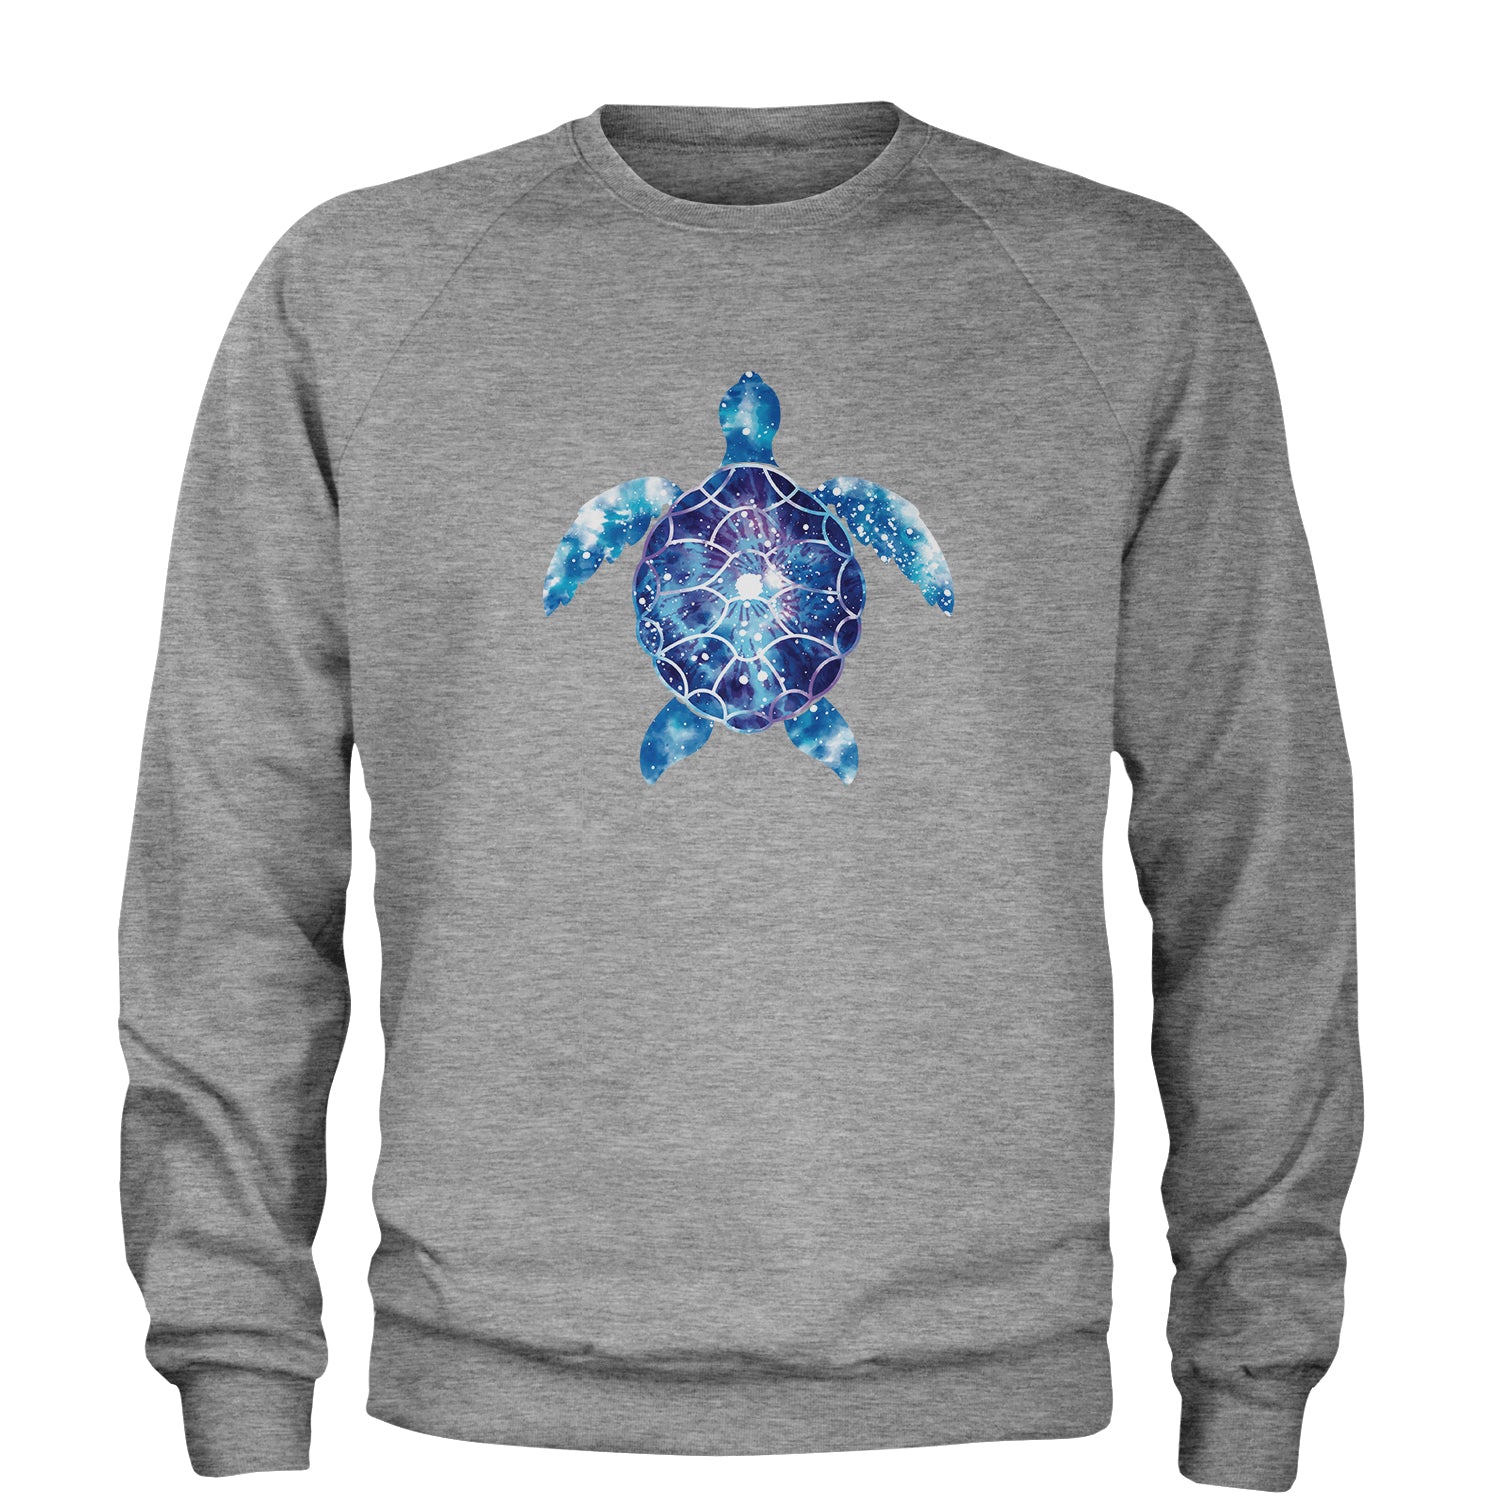 Tie Dye Sea Turtle Adult Crewneck Sweatshirt eco, friendly, life, ocean, turtle by Expression Tees